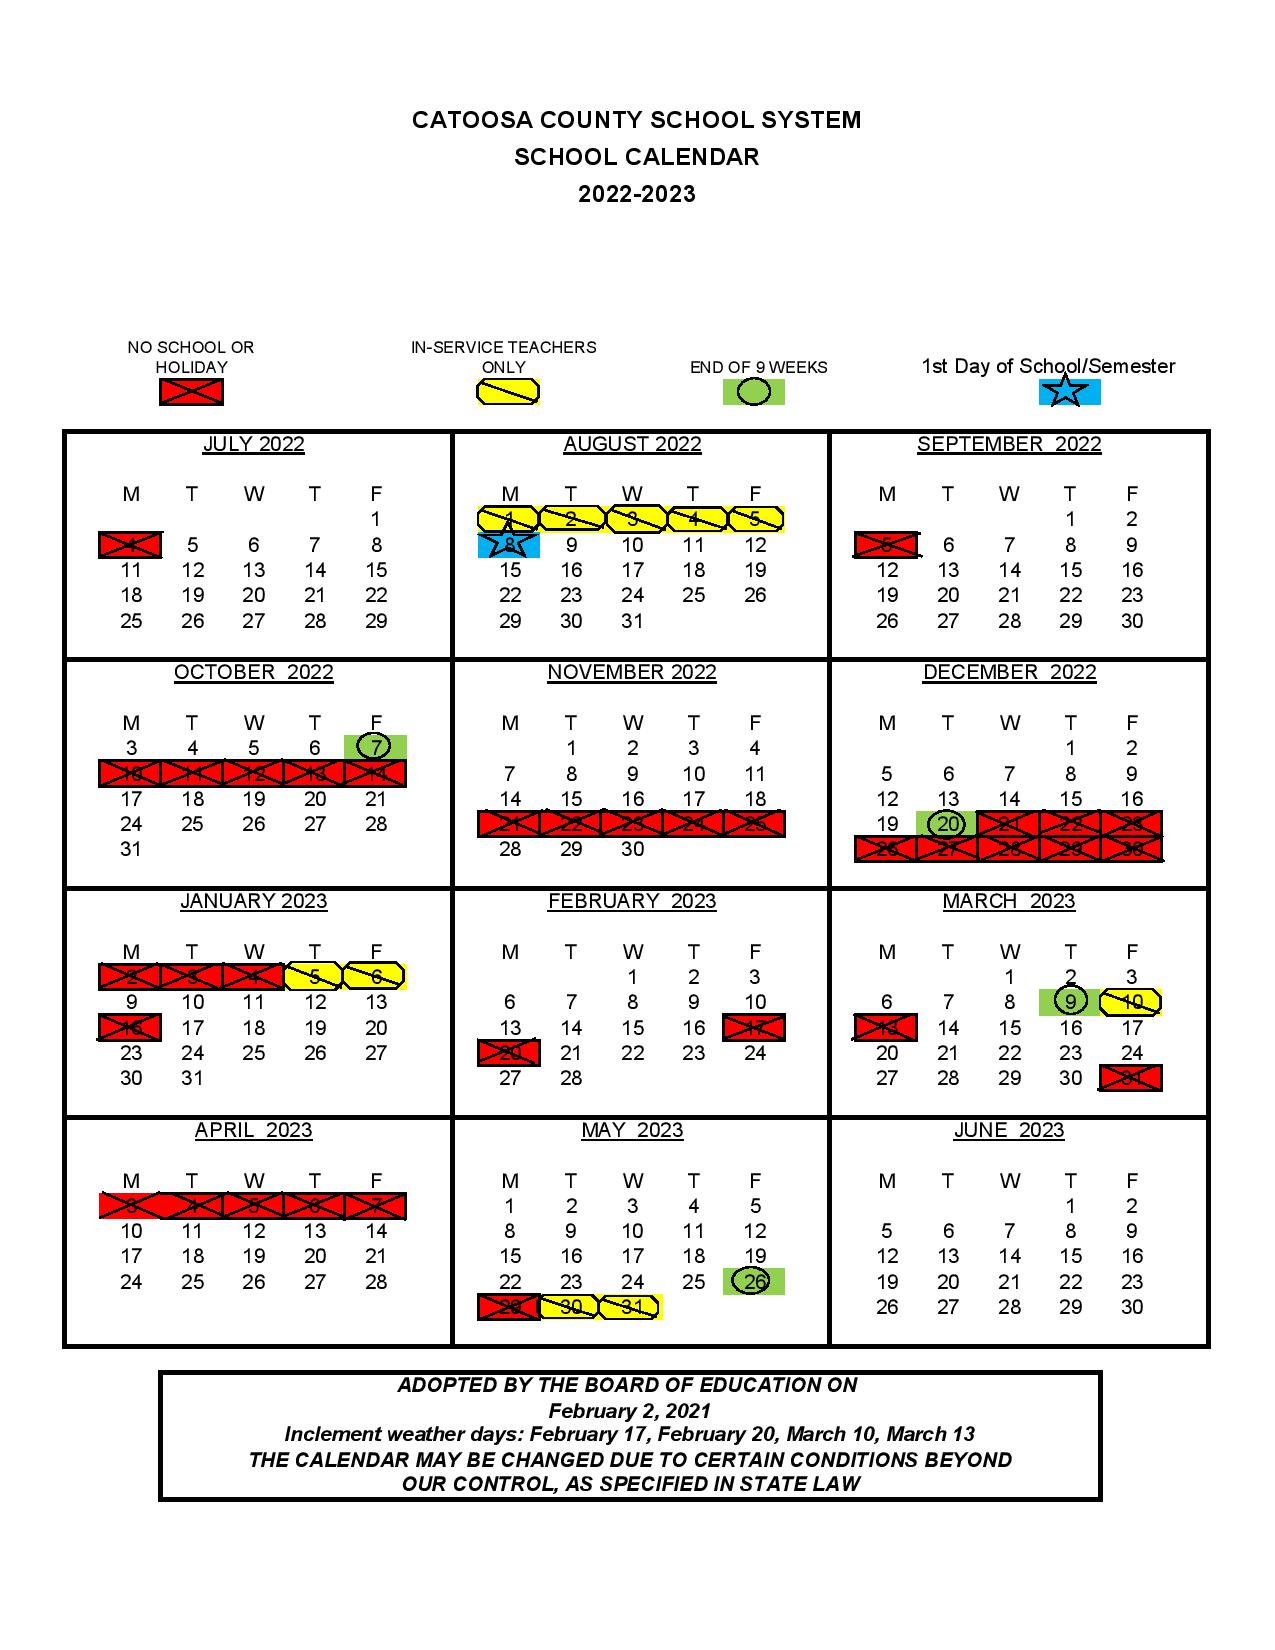 Catoosa County Schools Calendar 2023 in PDF